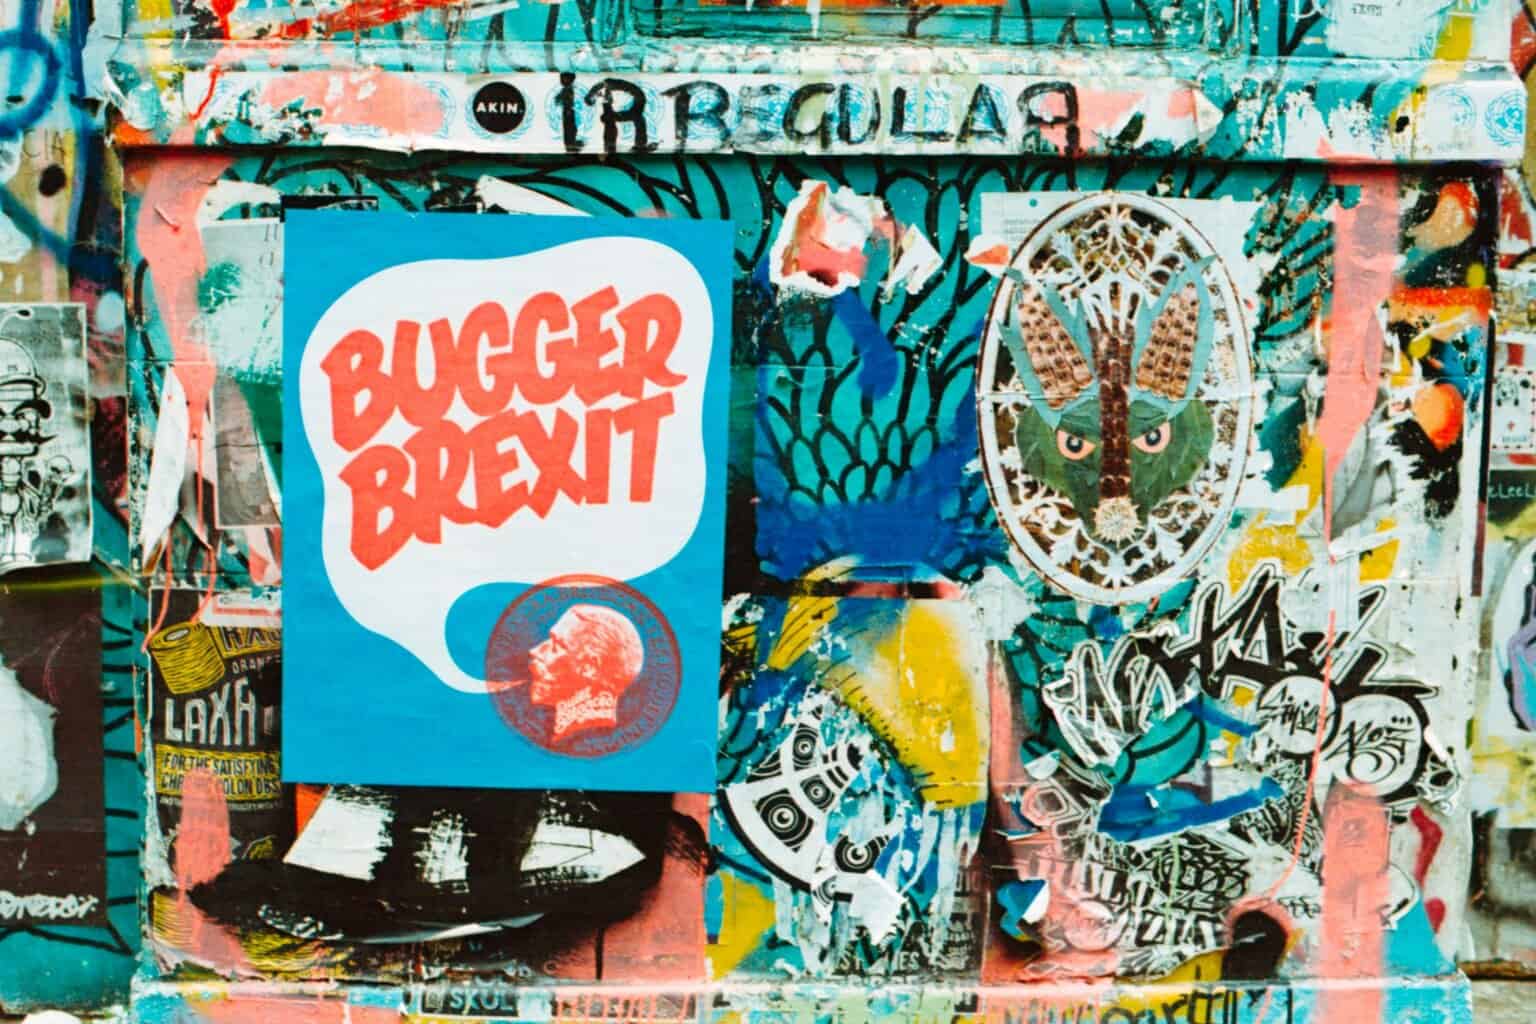 Bugger Brexit.London Street art Shoreditch.Shot on film, Kodak Portra 800, Nikon FM2n